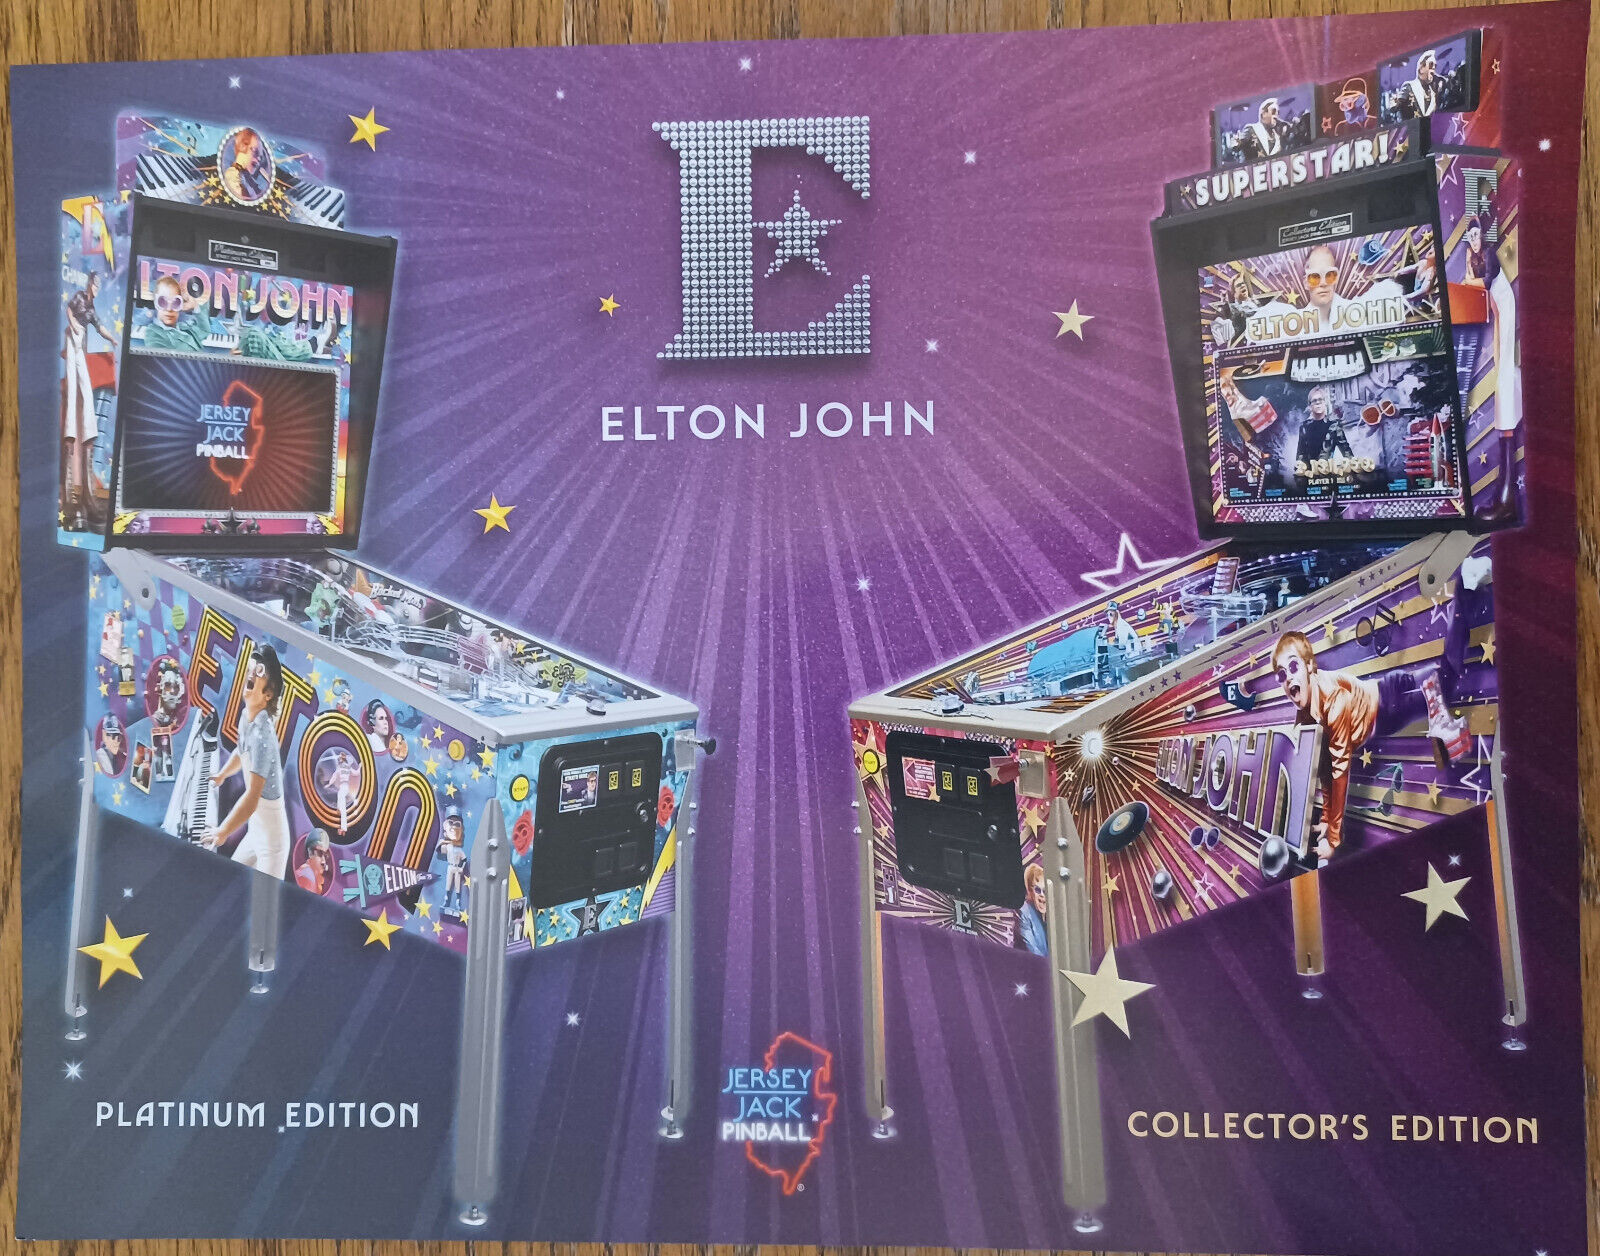 ELTON JOHN CE&PE by Jersey Jack Pinball flyer